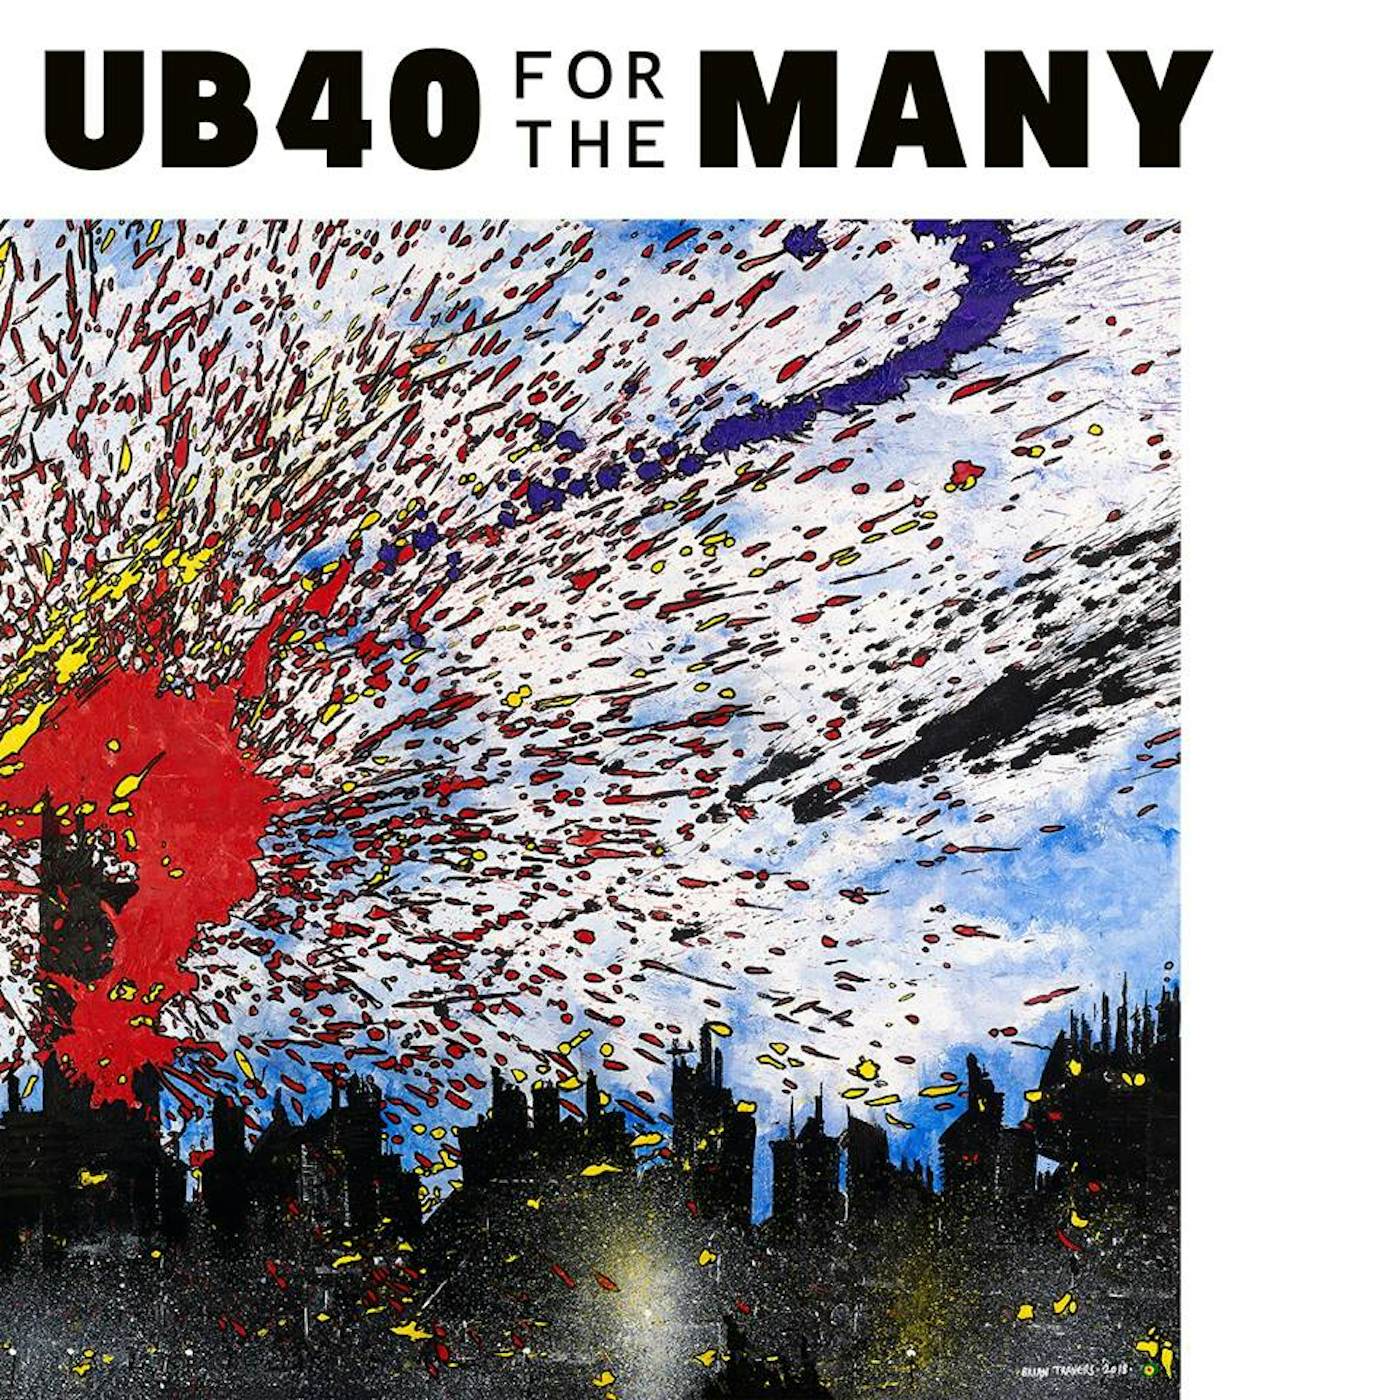 UB40 For the Many Vinyl Record